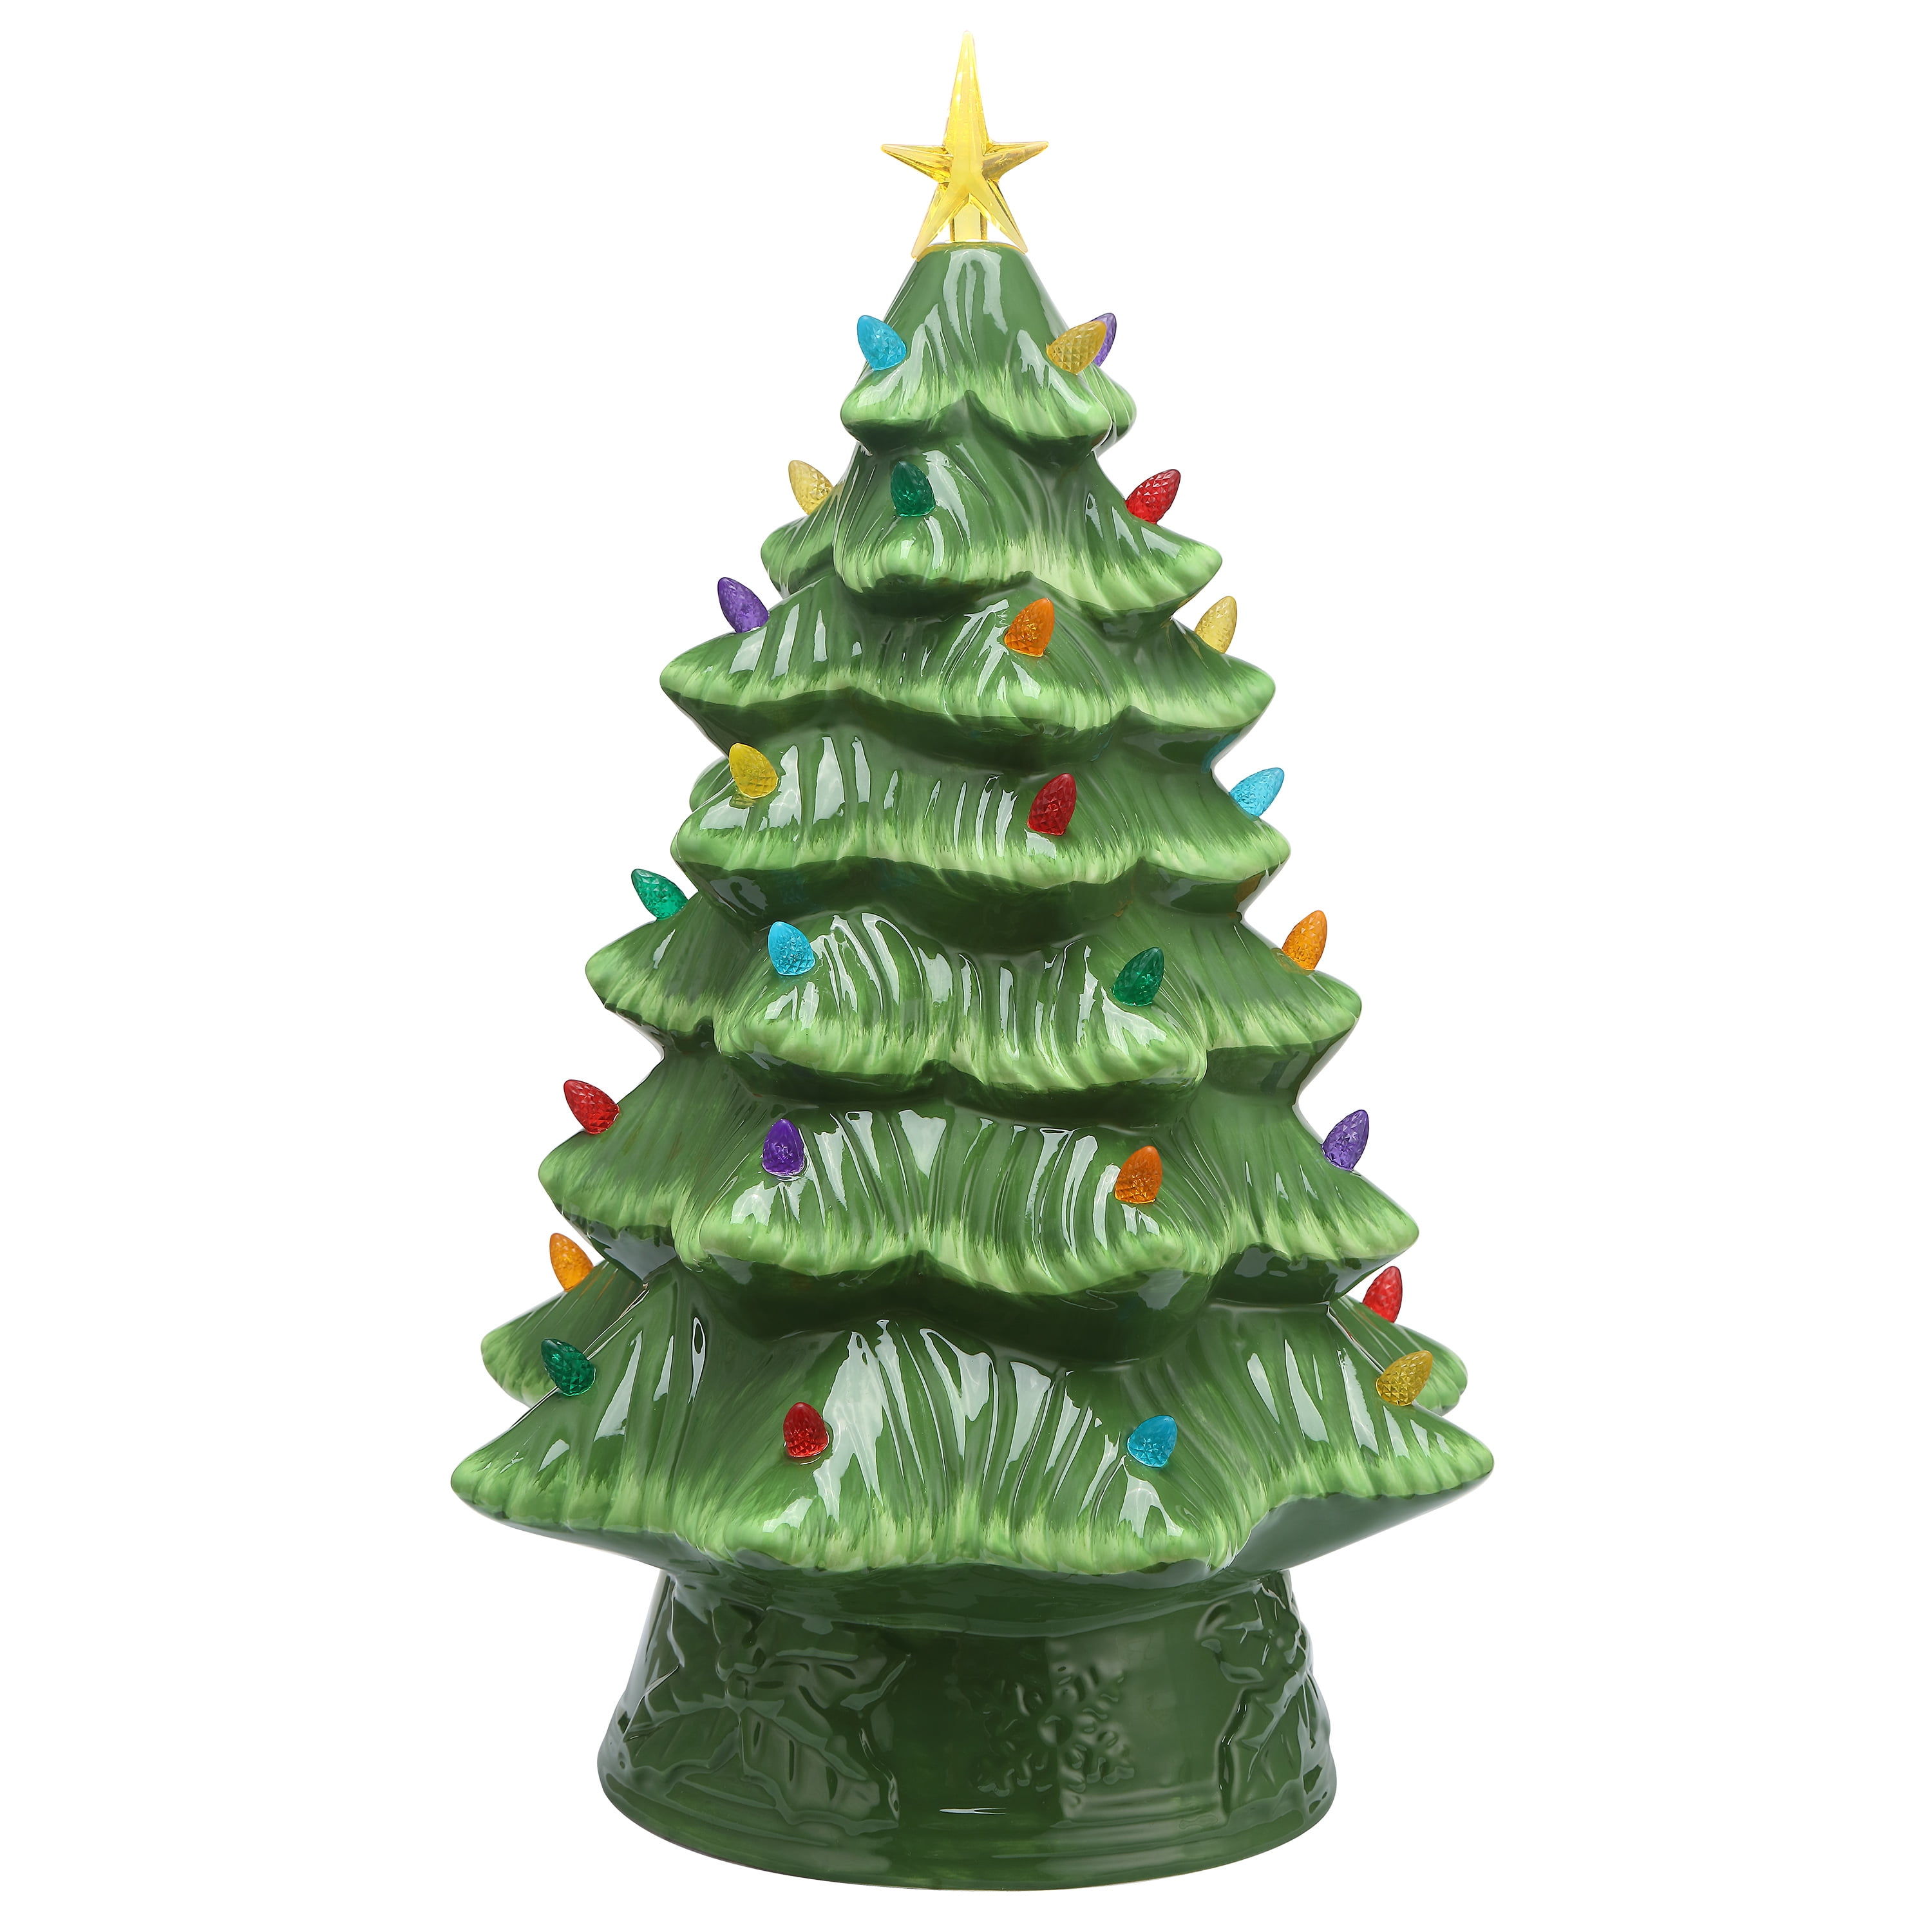 Lighted Green Ceramic Dolomite Christmas Tree - Optional Music